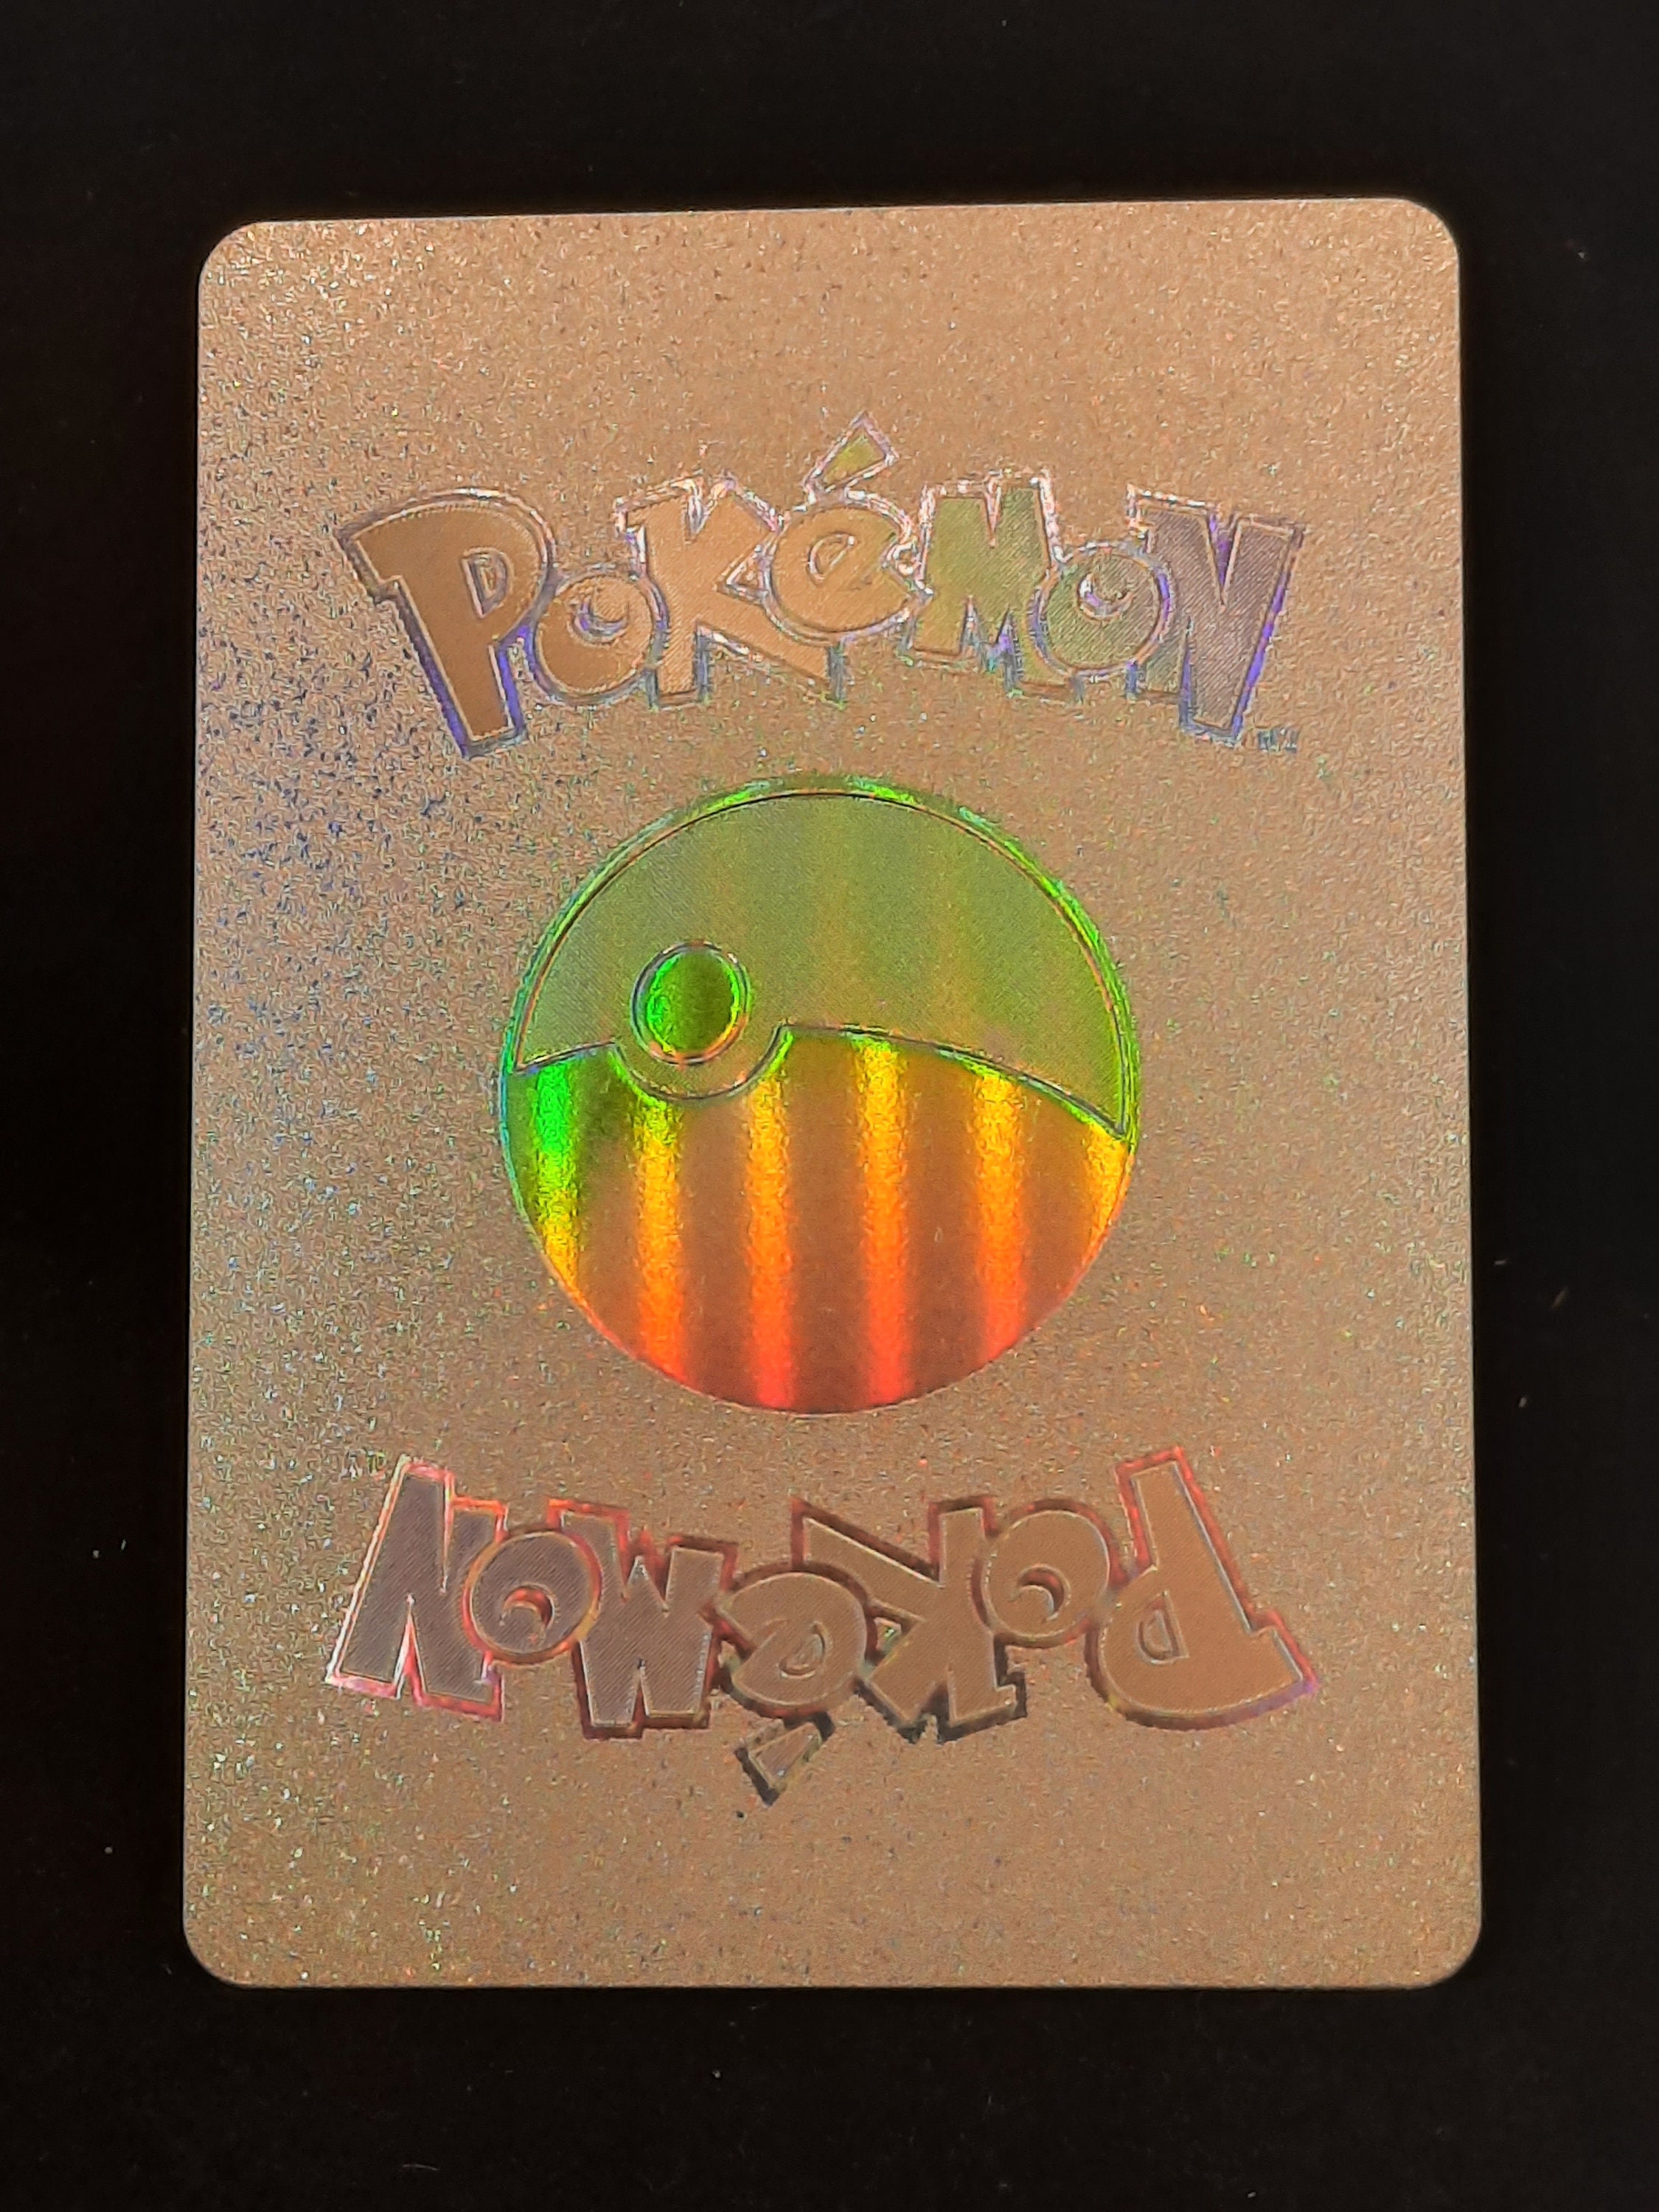 Gardevoir VMAX Rainbow Shiny Holographic UV Printed Plastic Card